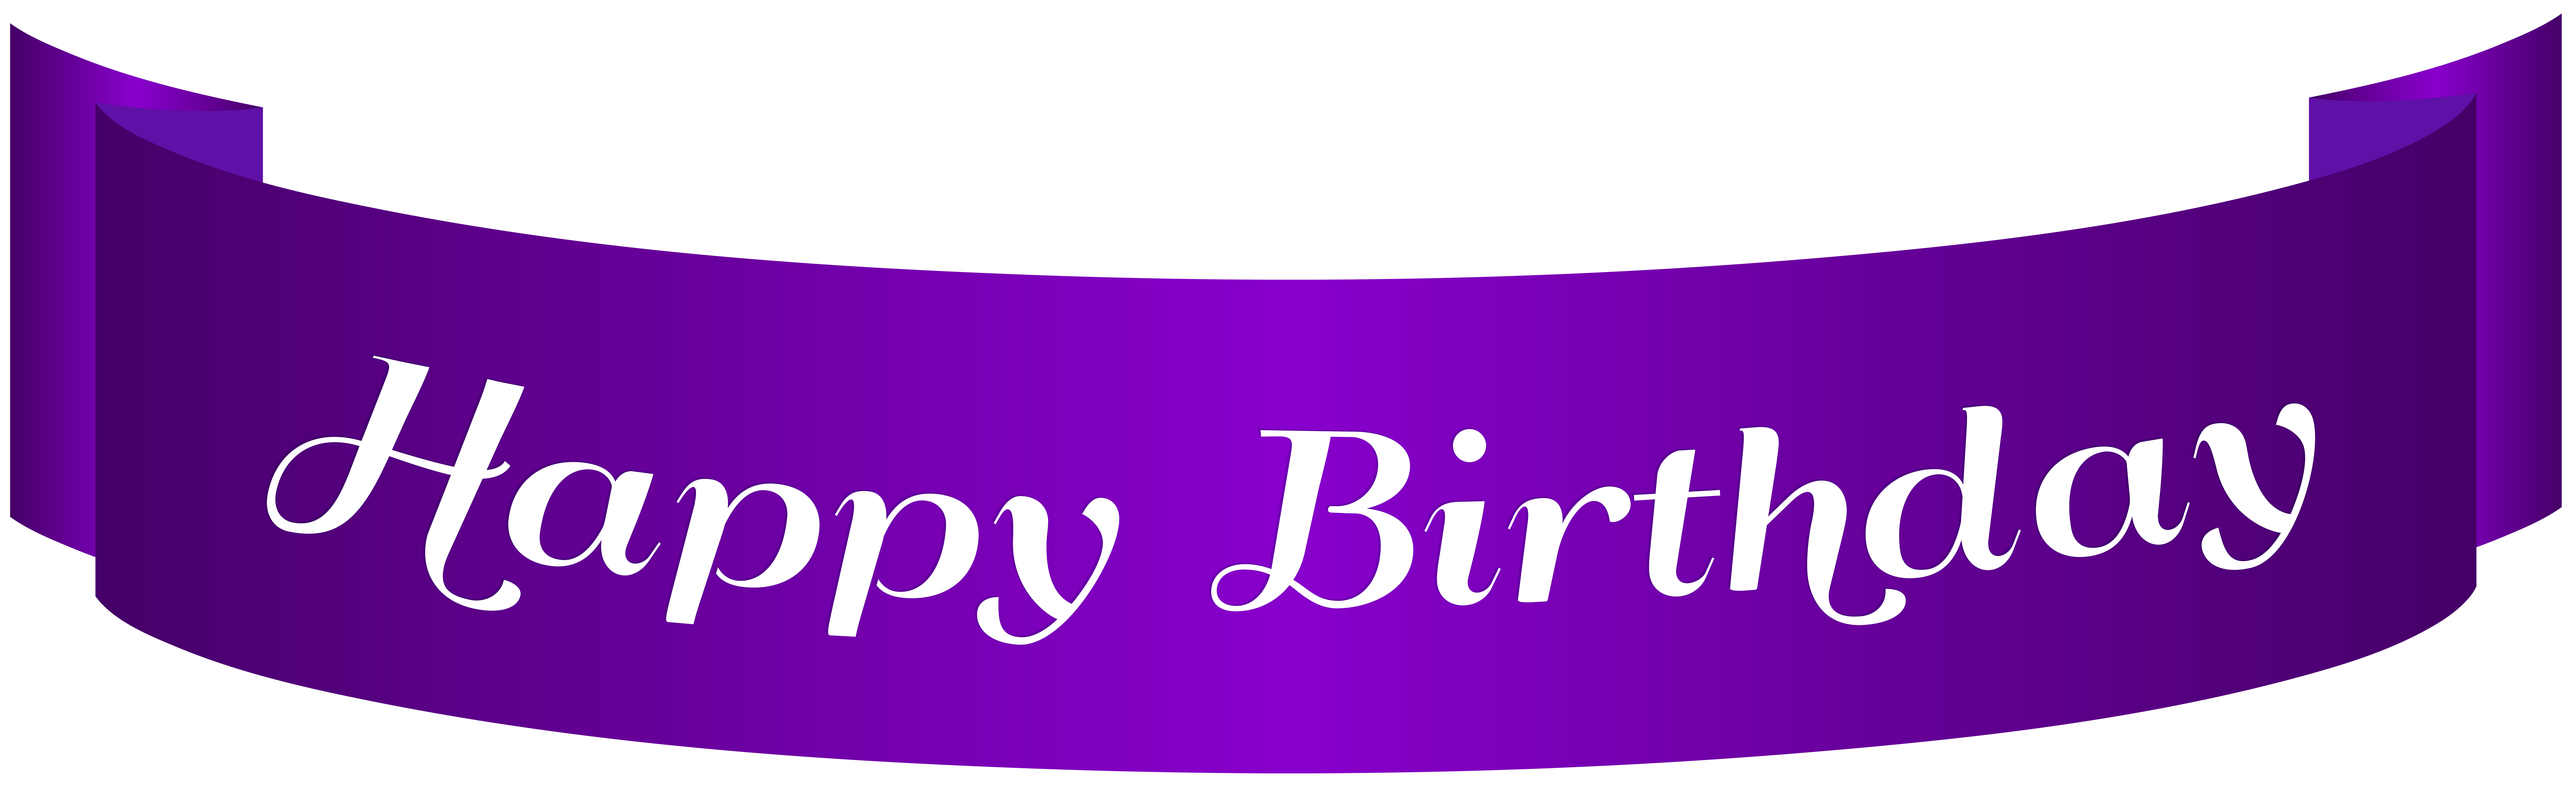 Purple Happy Birthday Sign